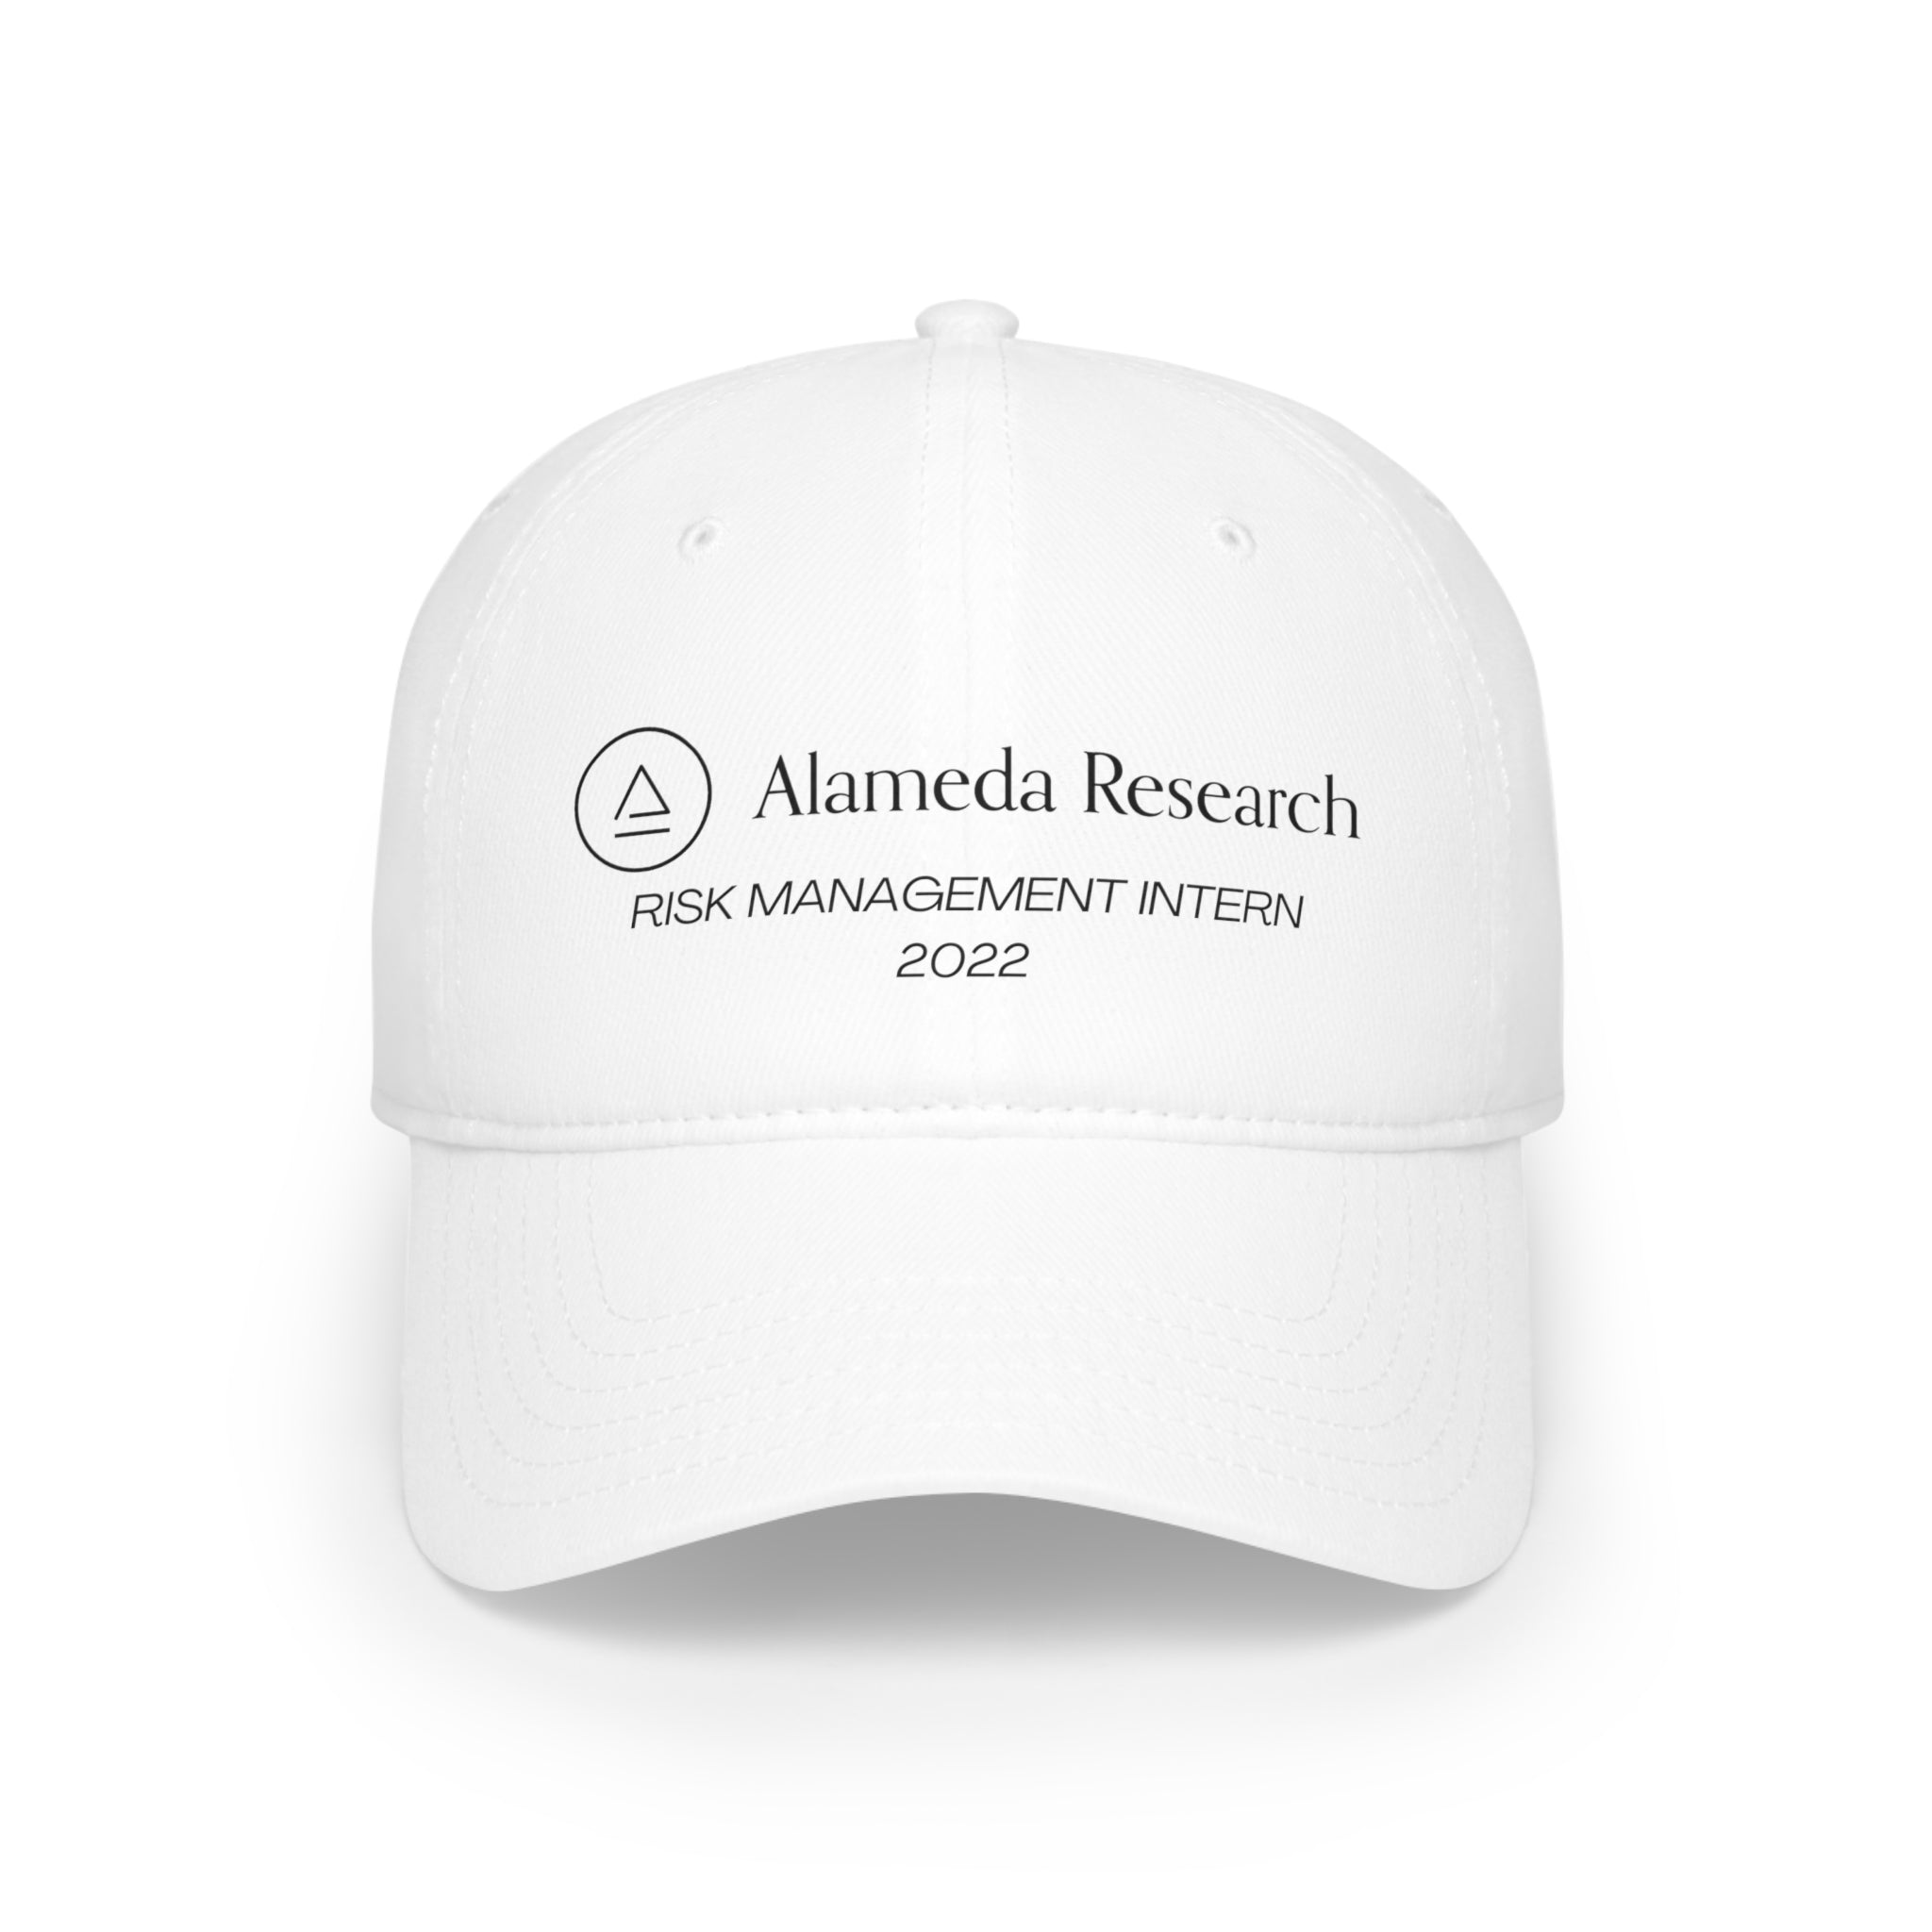 Alameda Research Risk Management Intern 2022 - Hat